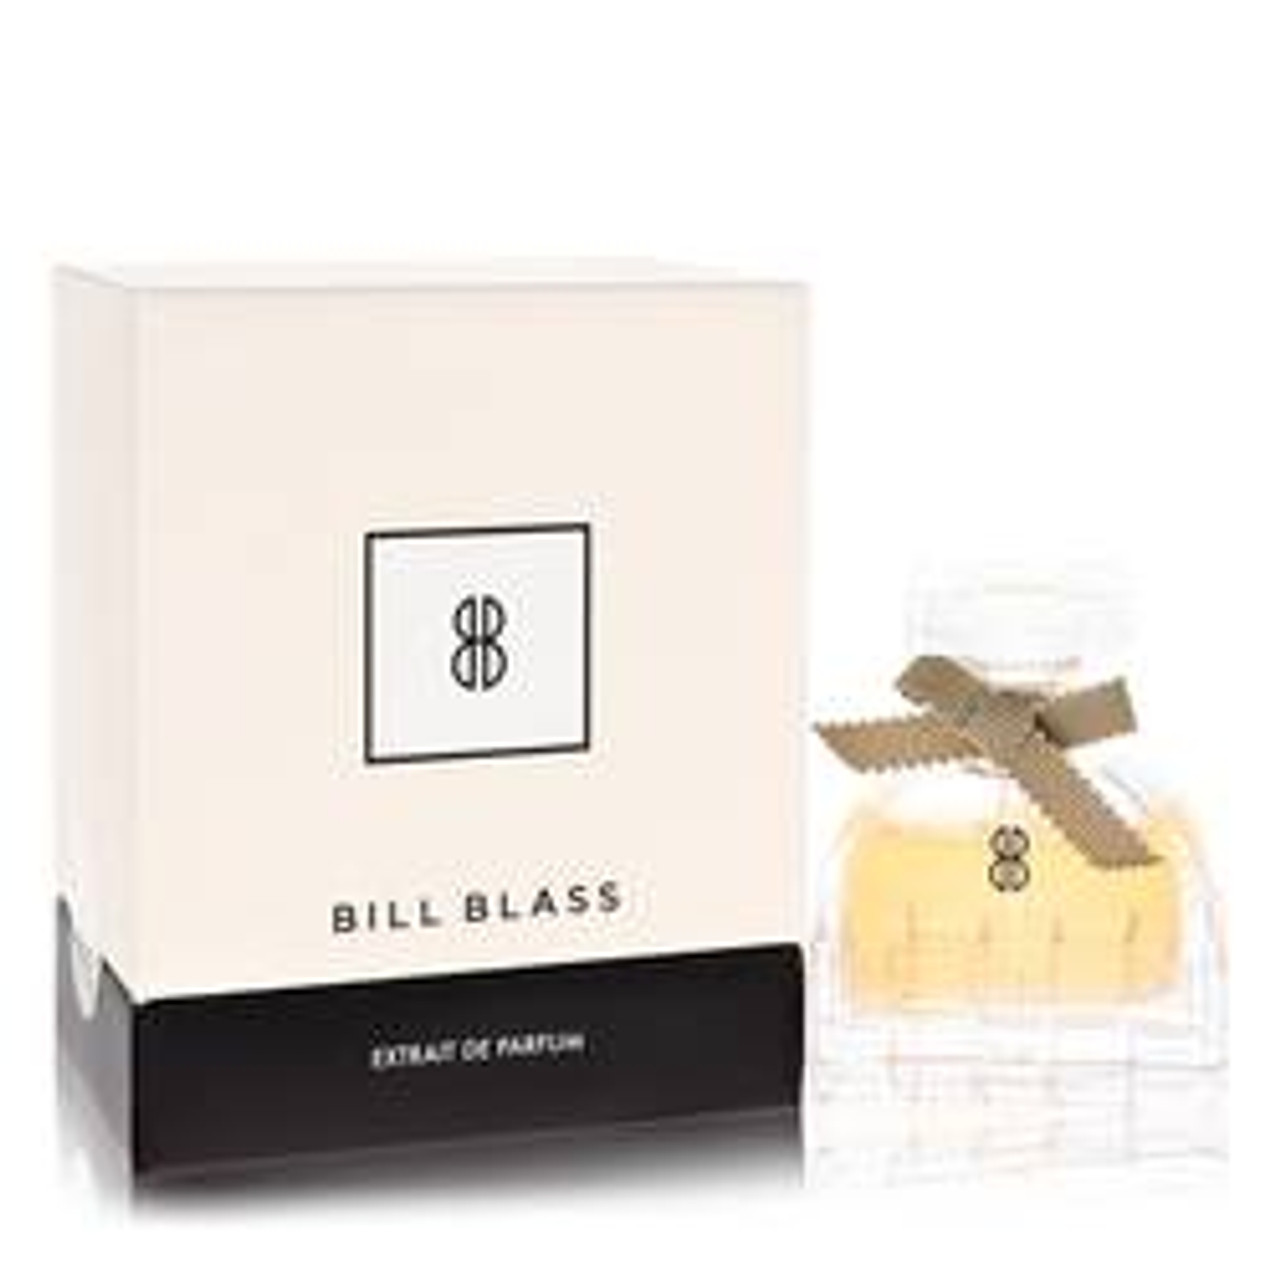 Bill Blass New Perfume By Bill Blass Mini Parfum Extrait 0.7 oz for Women - [From 63.00 - Choose pk Qty ] - *Ships from Miami